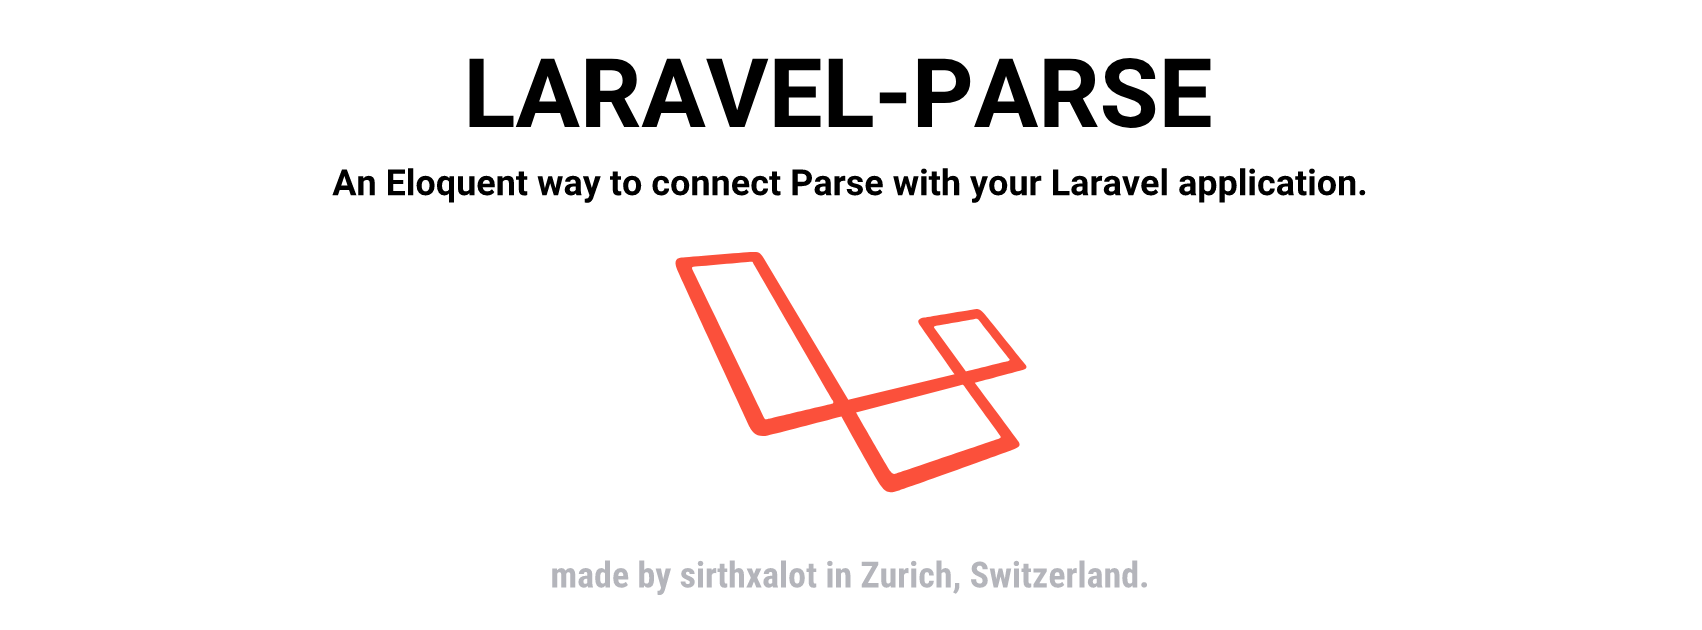 _images/laravel-parse.png